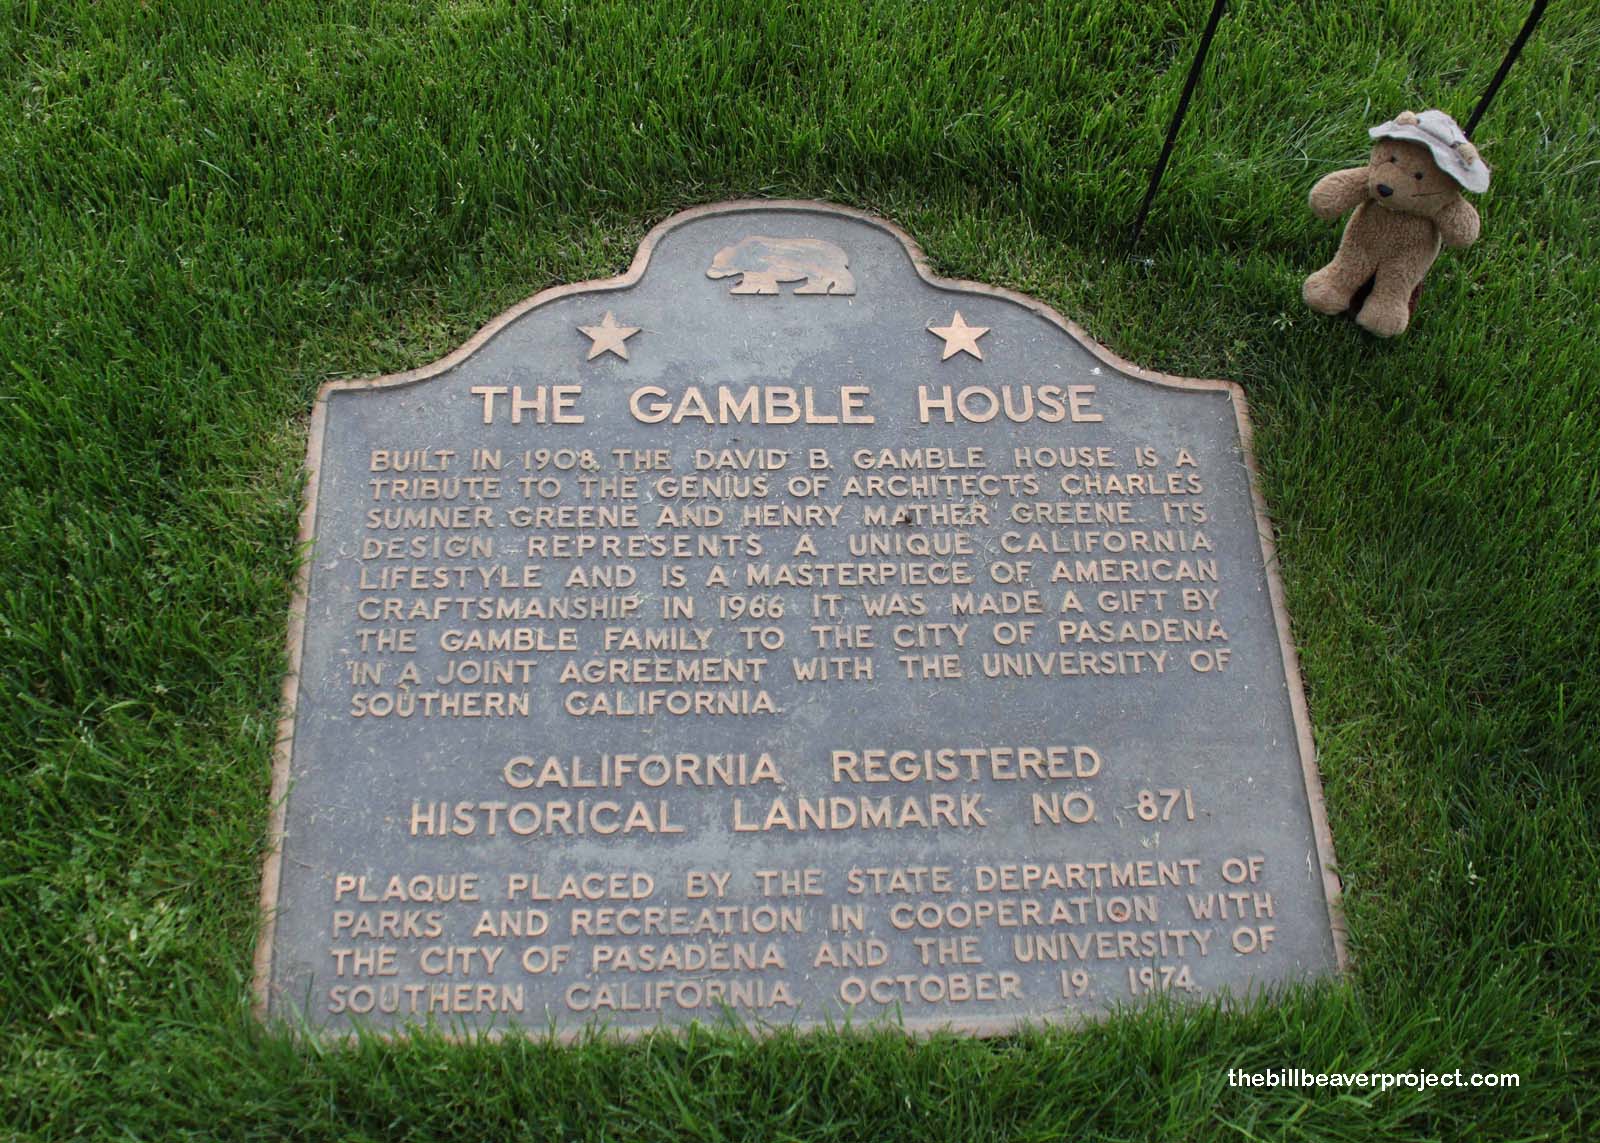 The Gamble House